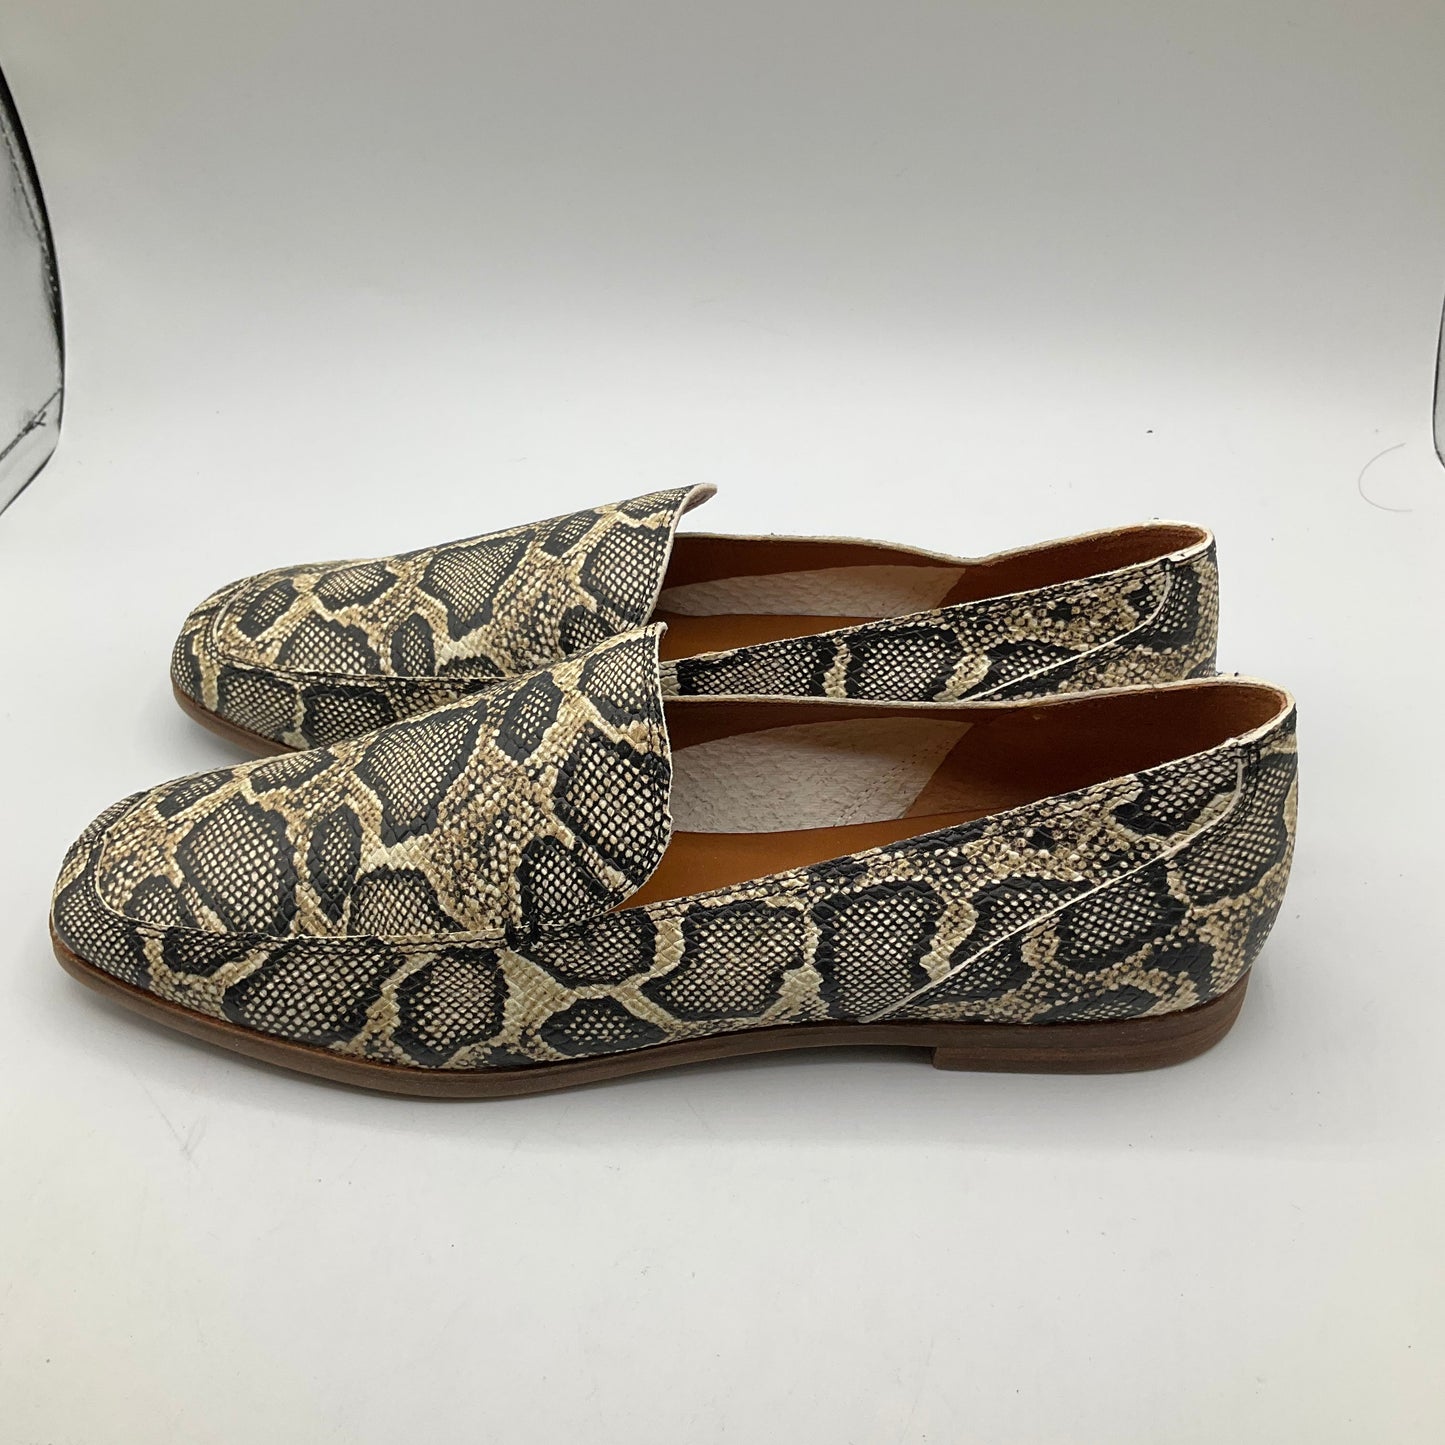 Snakeskin Print Shoes Flats Lucky Brand, Size 10